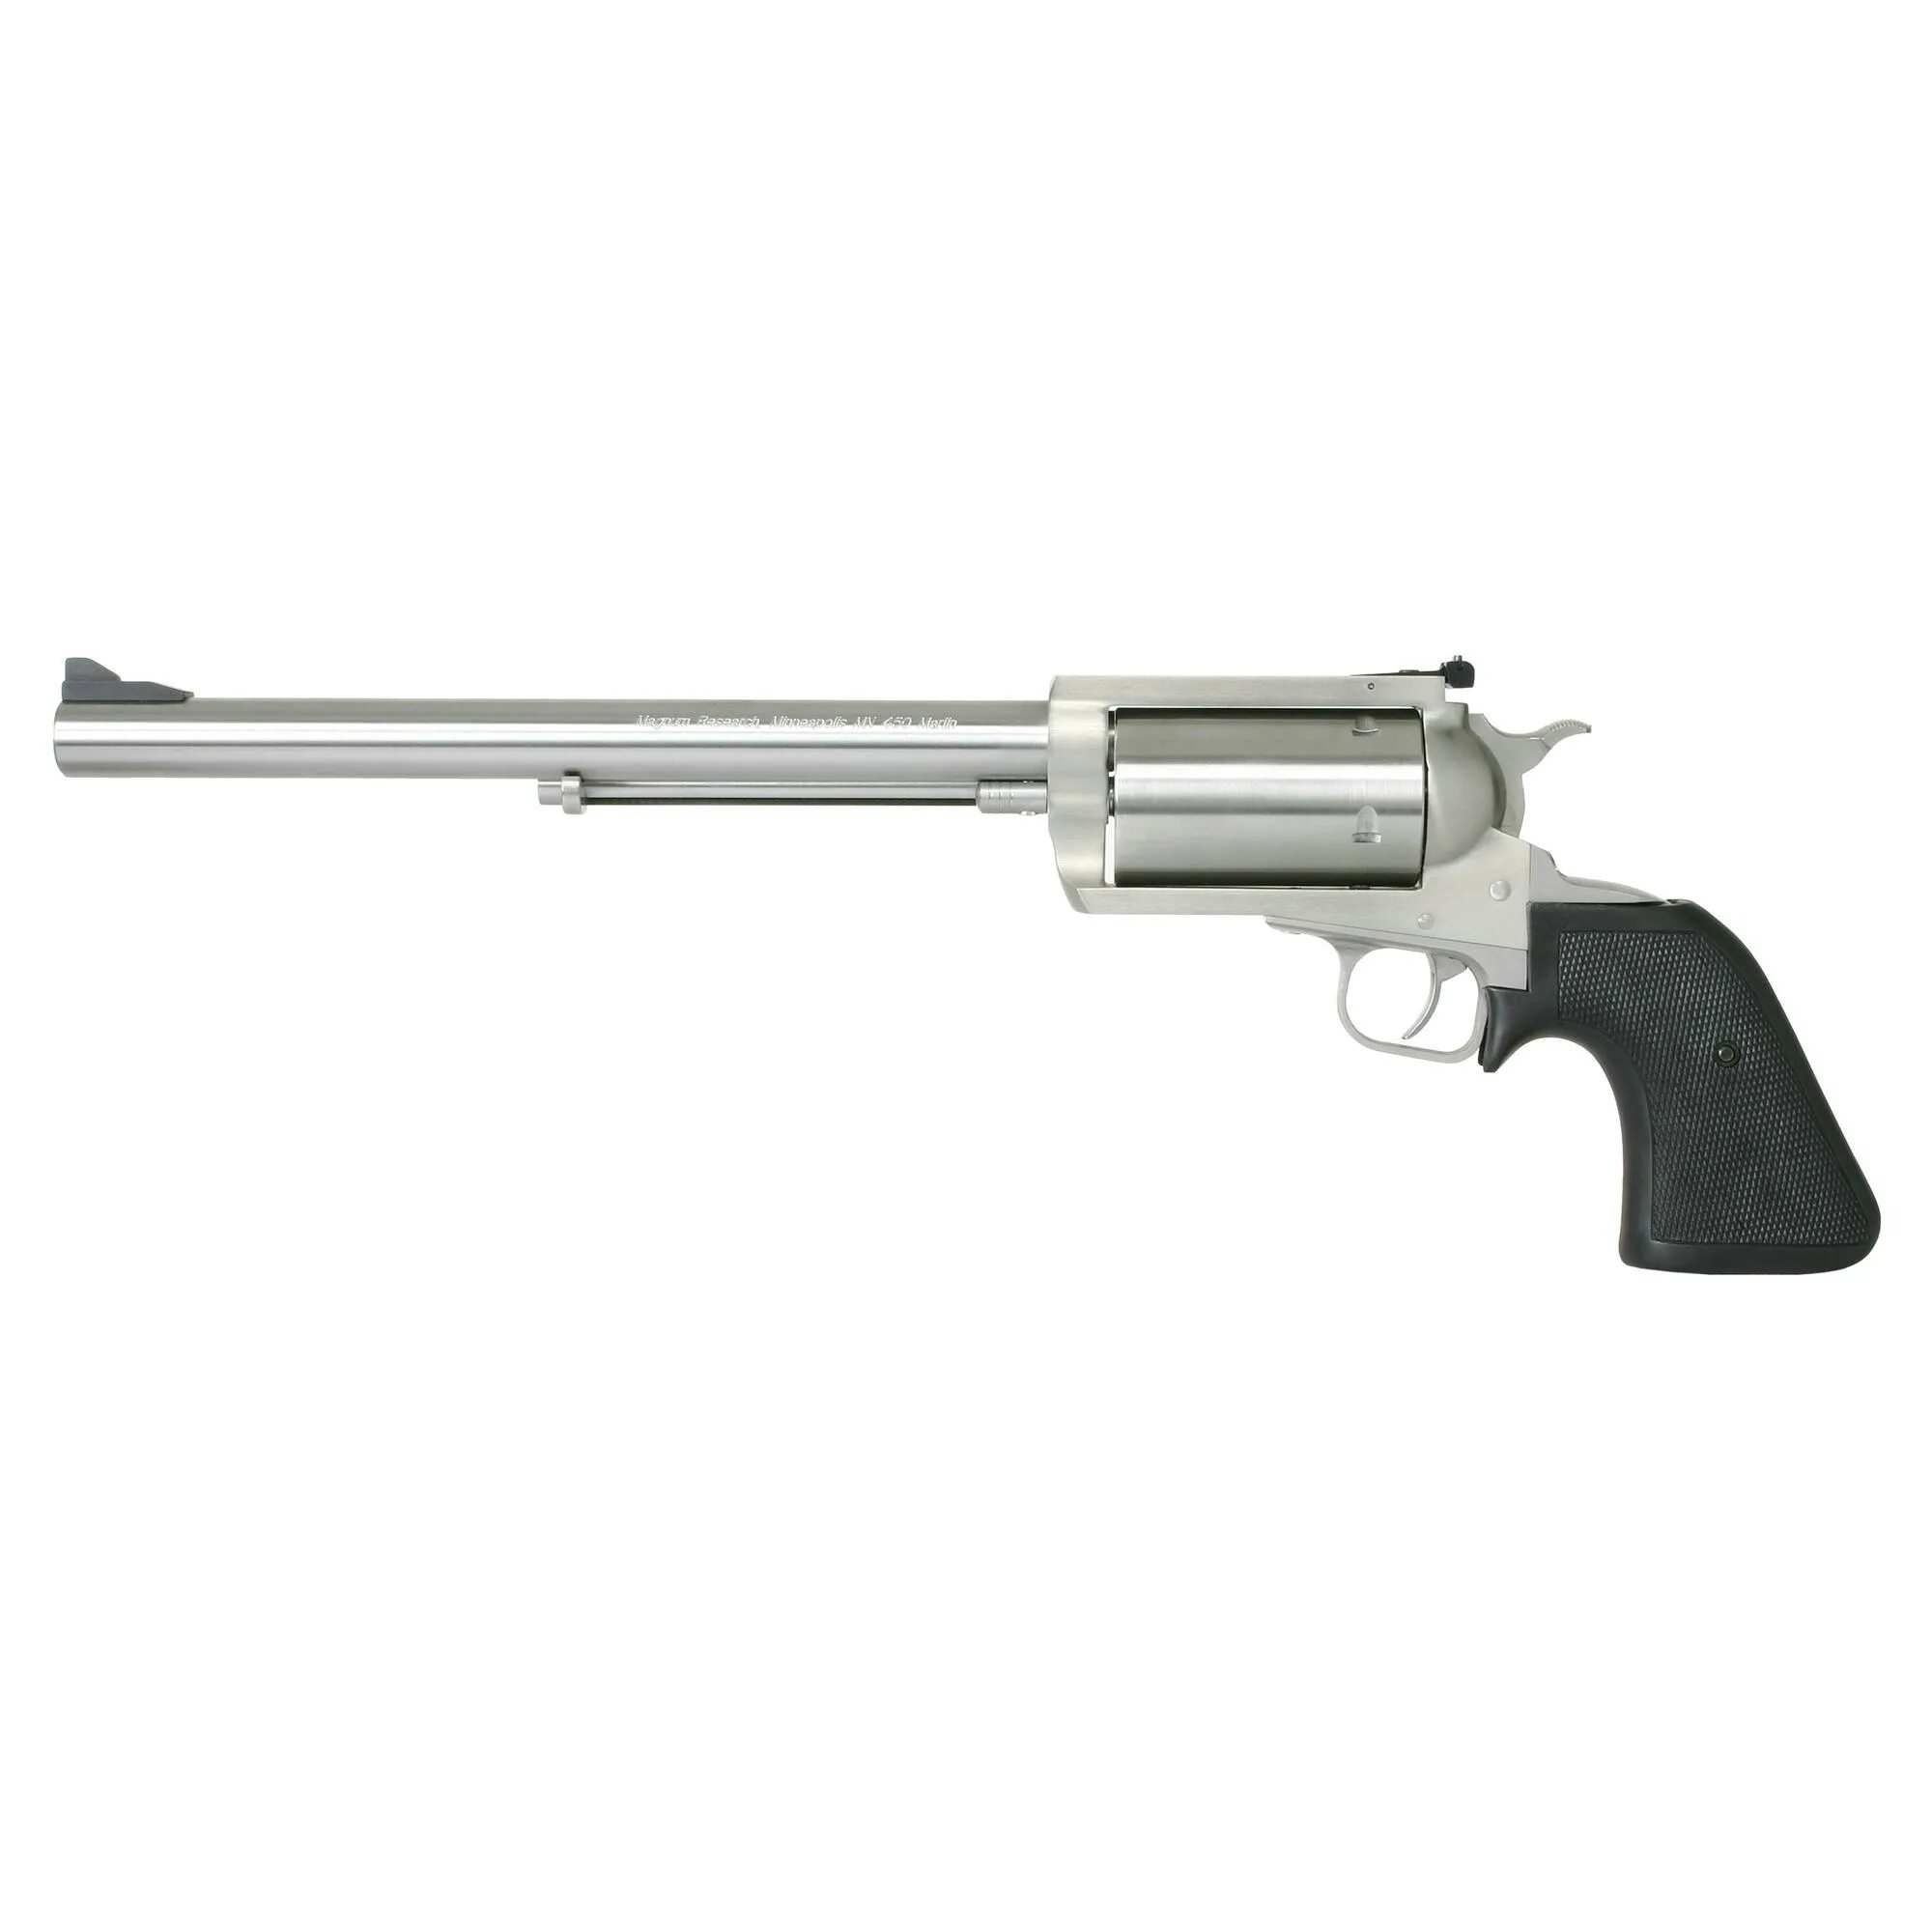 Калибр магнума. Магнум 45 калибра. Револьвер Магнум 45. Калибр револьвера Магнум. Magnum research BFR 45-70 Revolver.